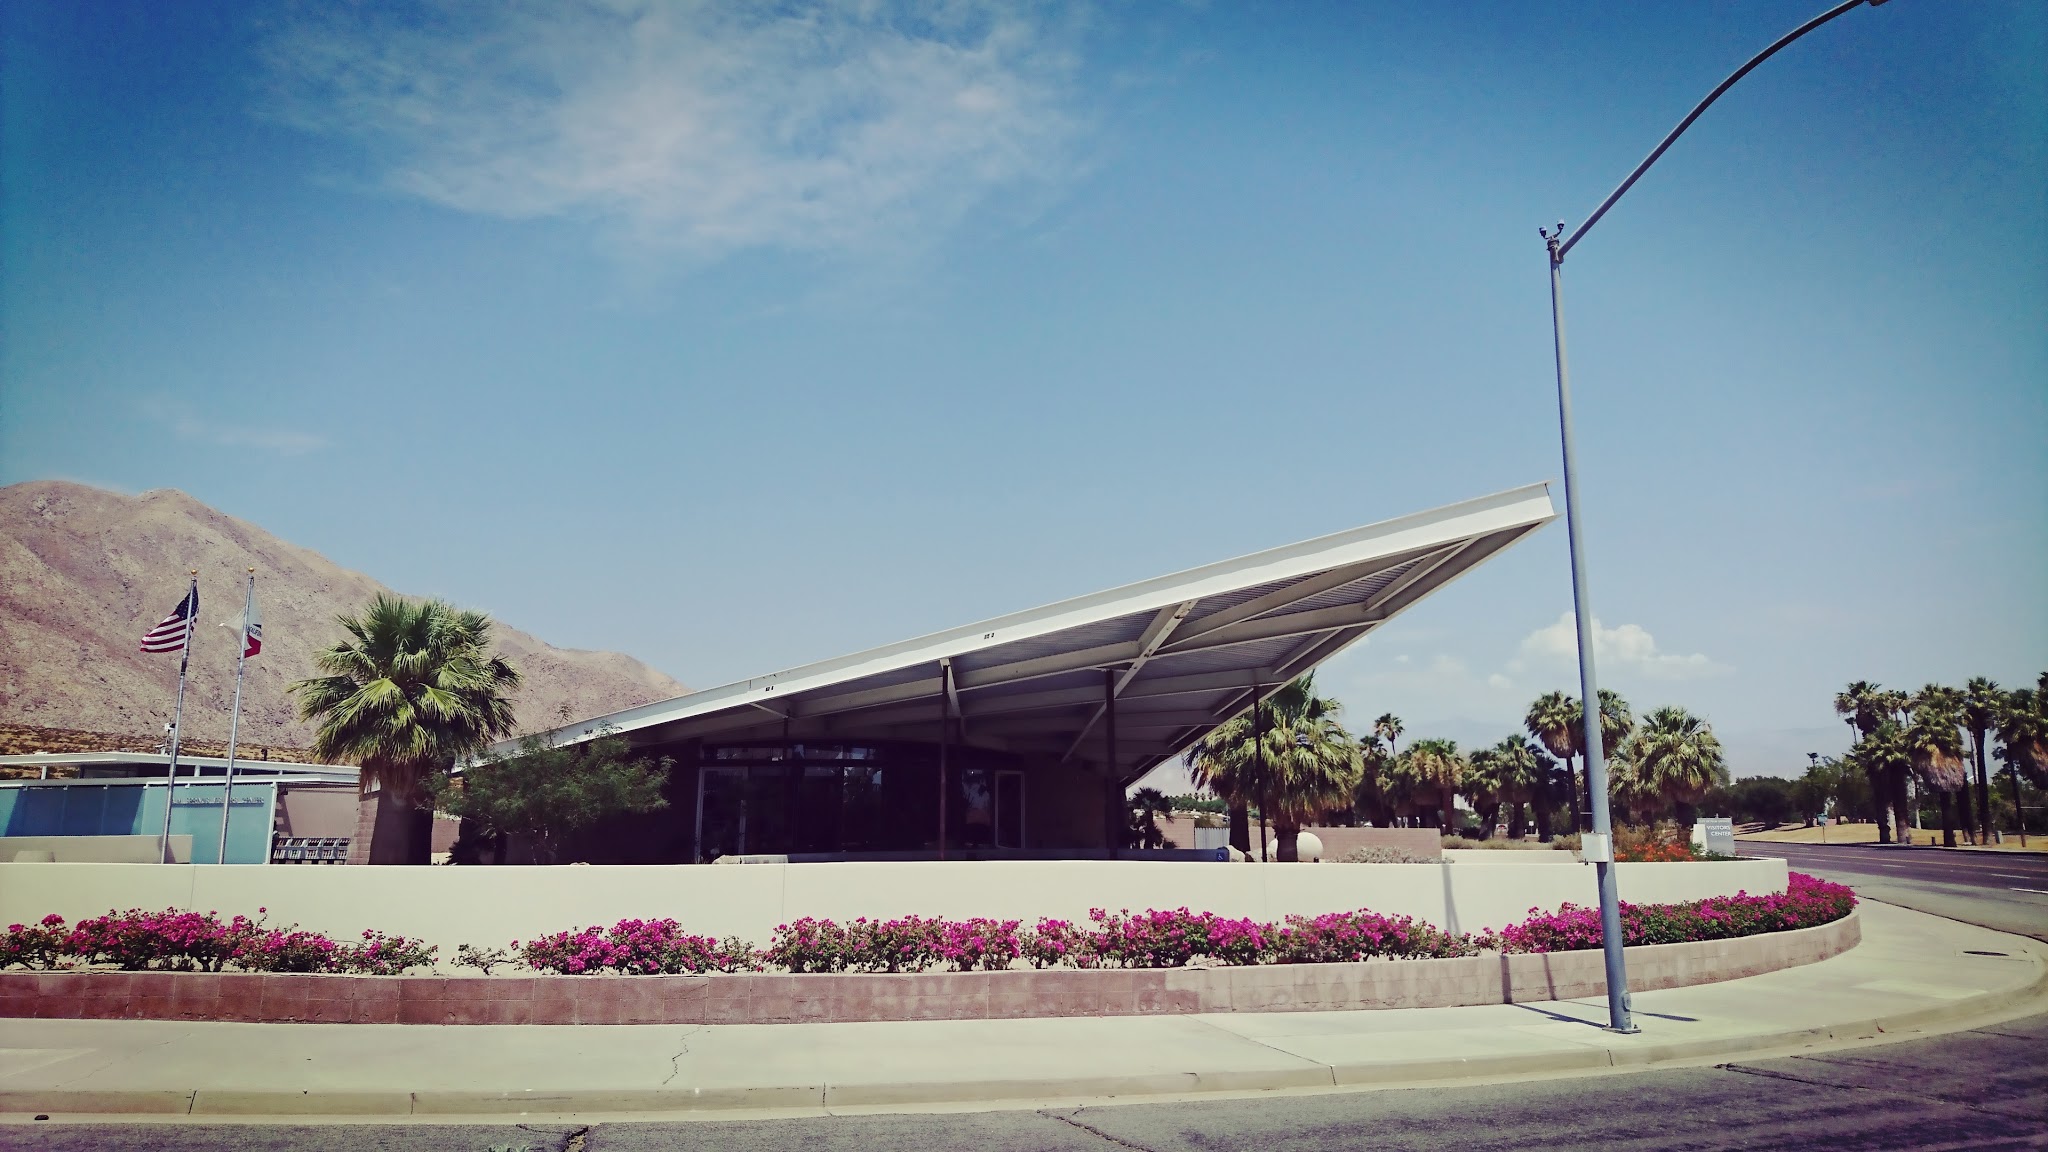 Albert Frey, Palm Springs Tramway Gas Station